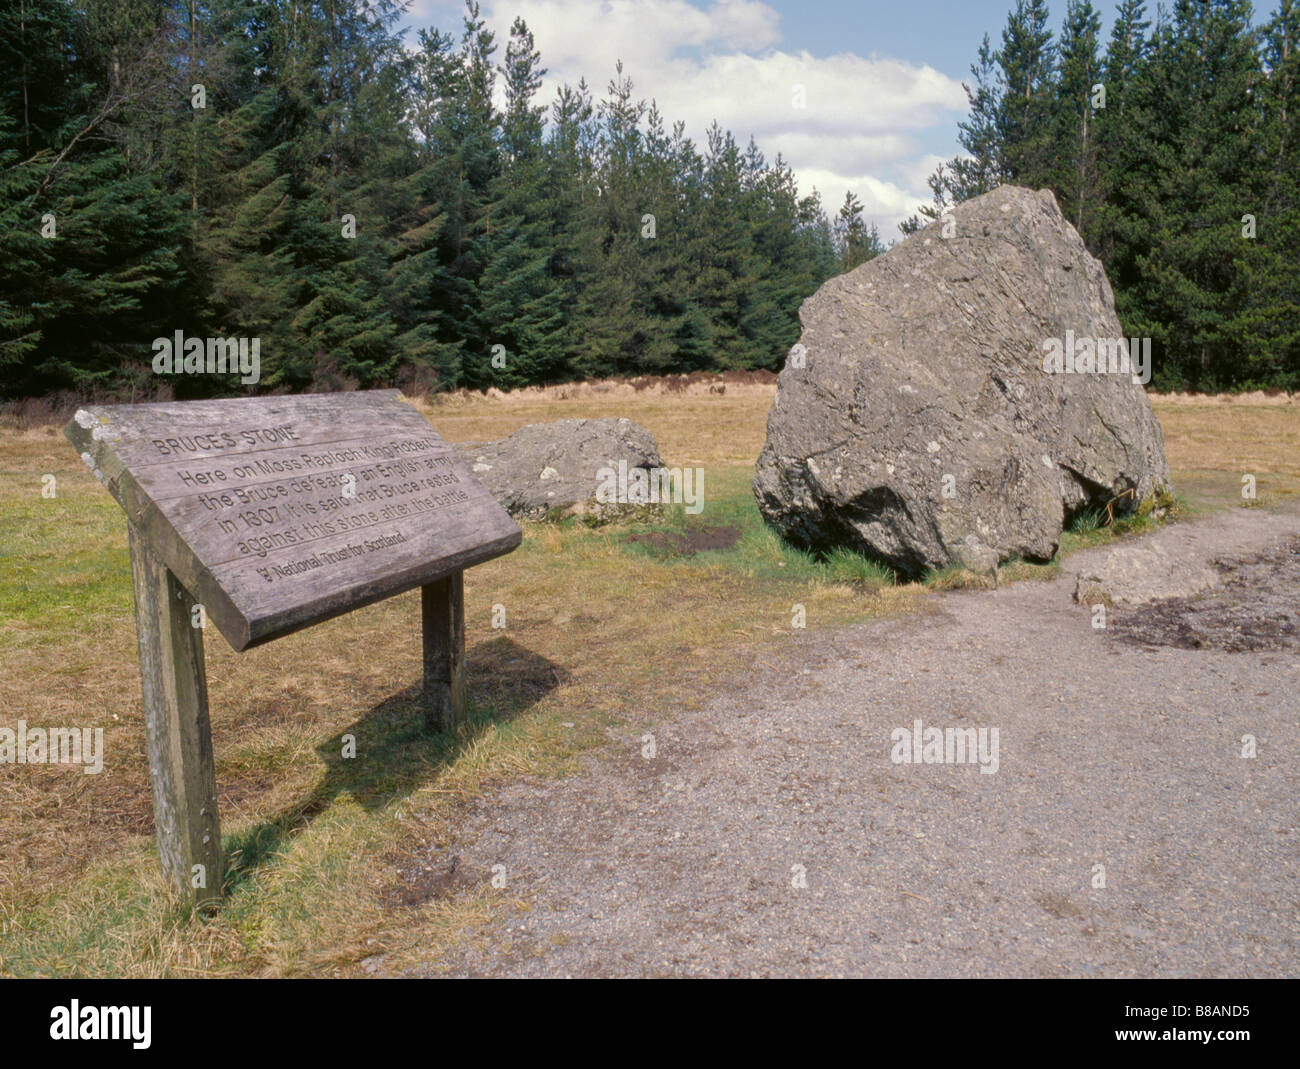 Bruce della pietra, Moss Raploch, Clatteringshaws Loch, Galloway Forest Park, Dumfries & Galloway, Scotland, Regno Unito. Foto Stock